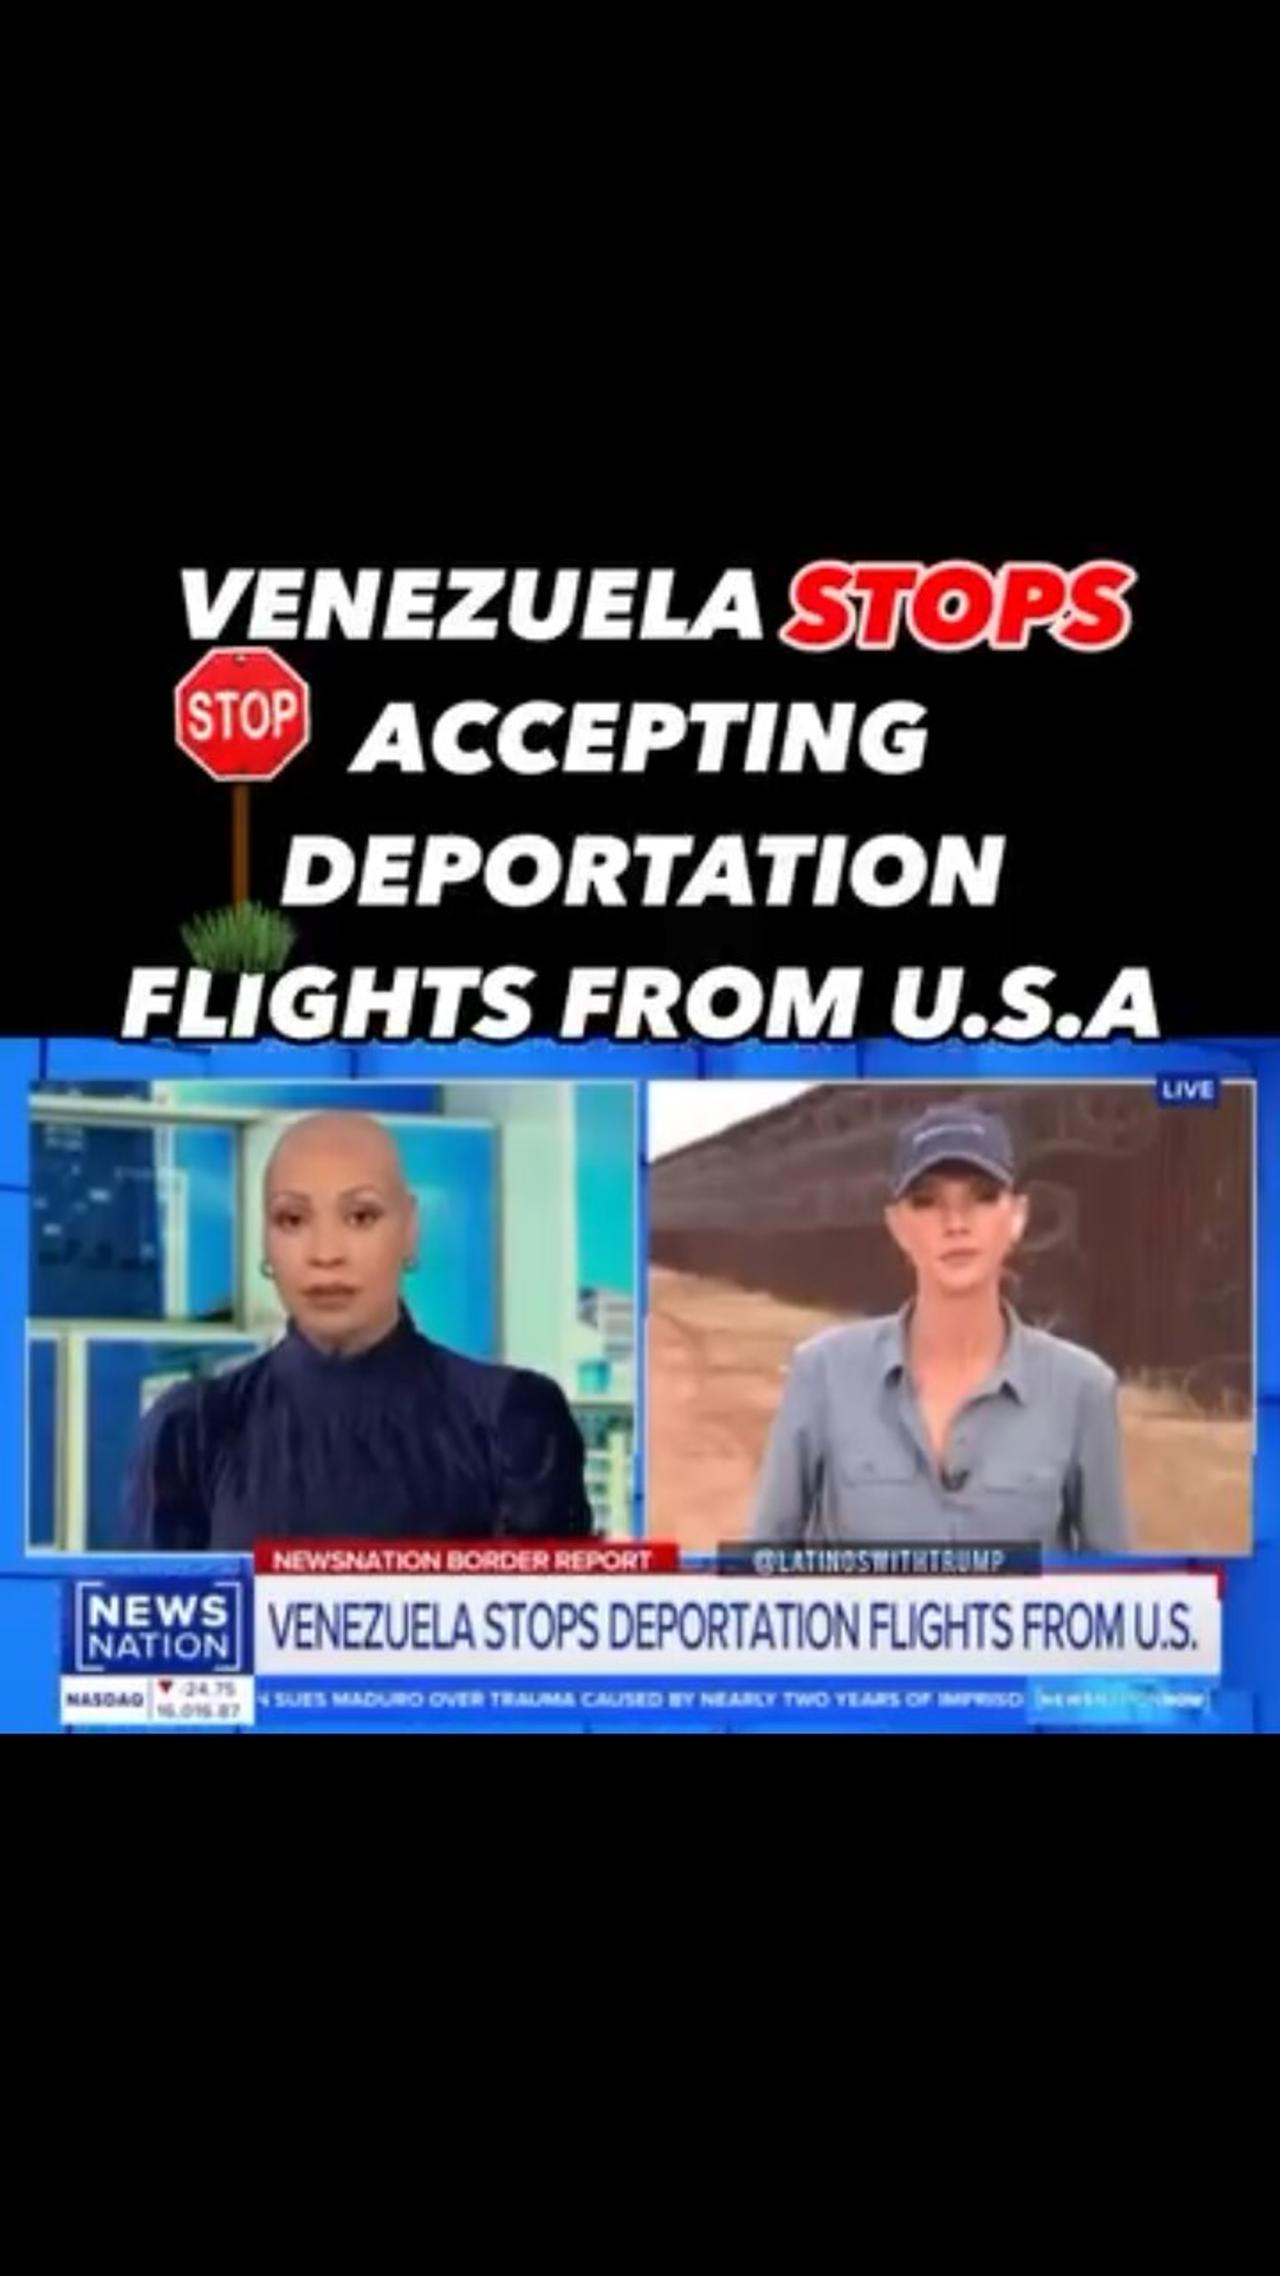 VENEZUELA STOPS ACCEPTING DEPORTATION FLIGHTS FROM U.S.A